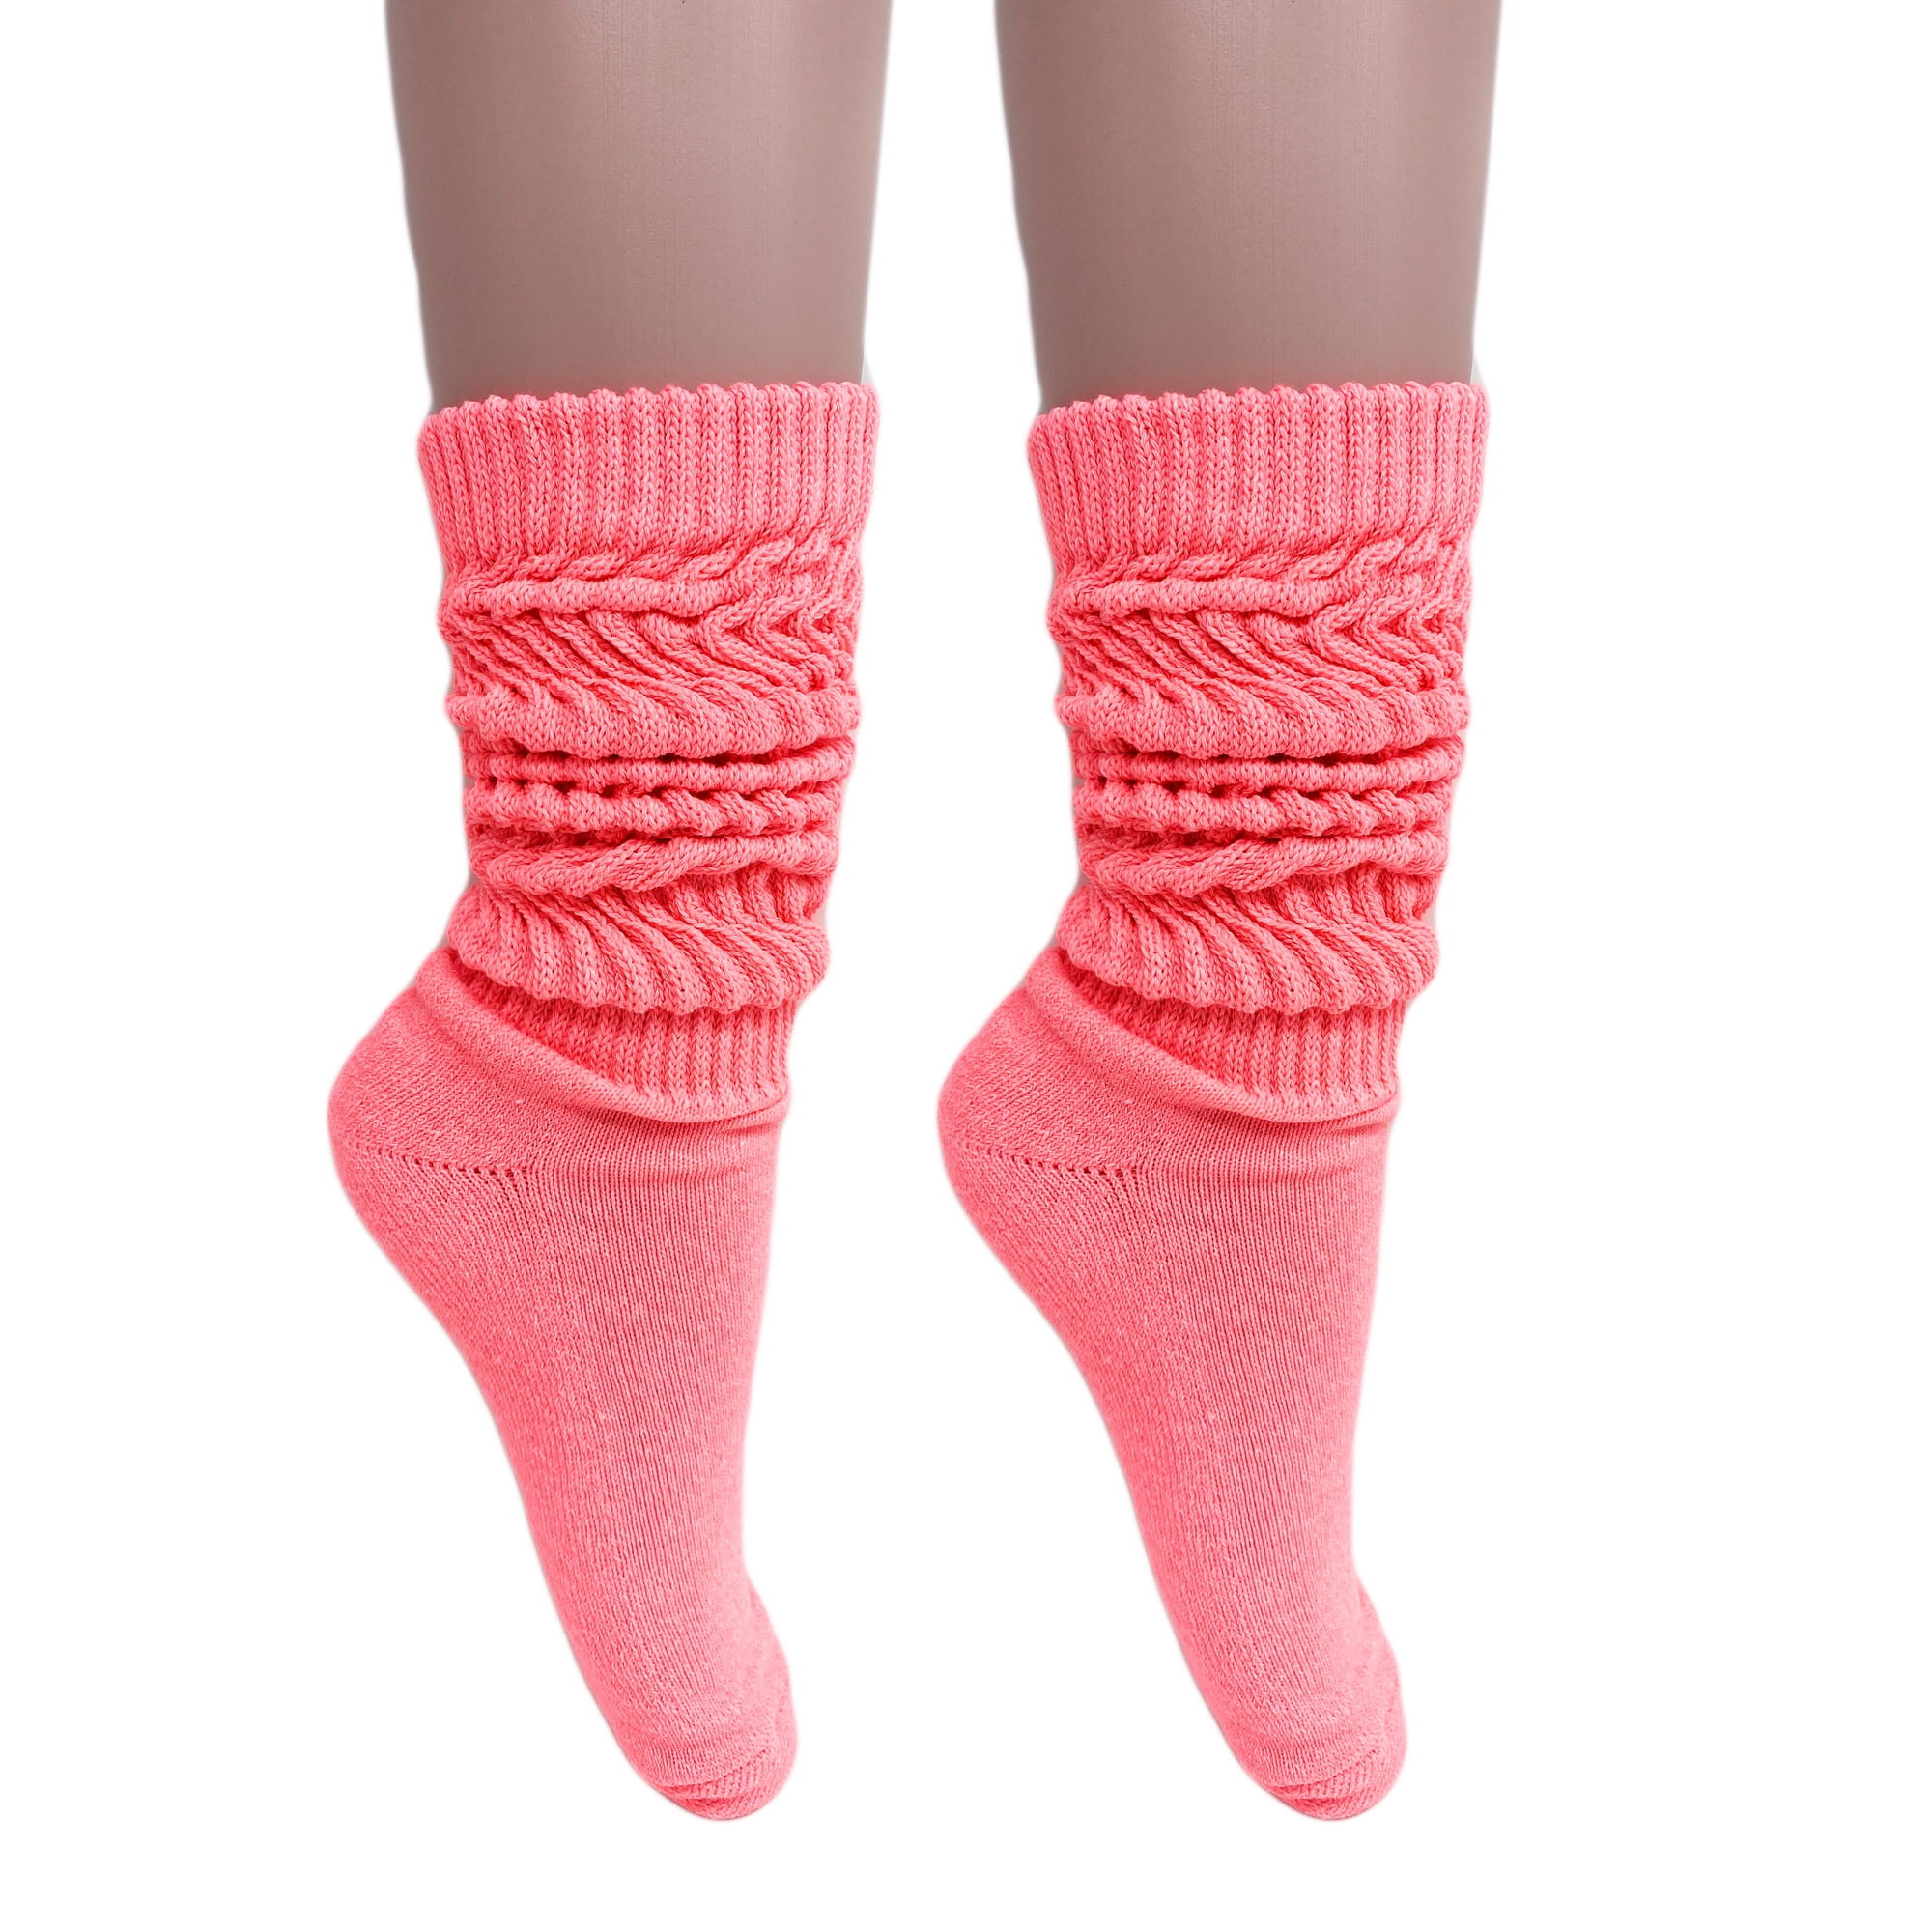 Nike Studio Footie Women's Grip Toeless Socks SX7827-010 Yoga Pilates Sz  5.5-7